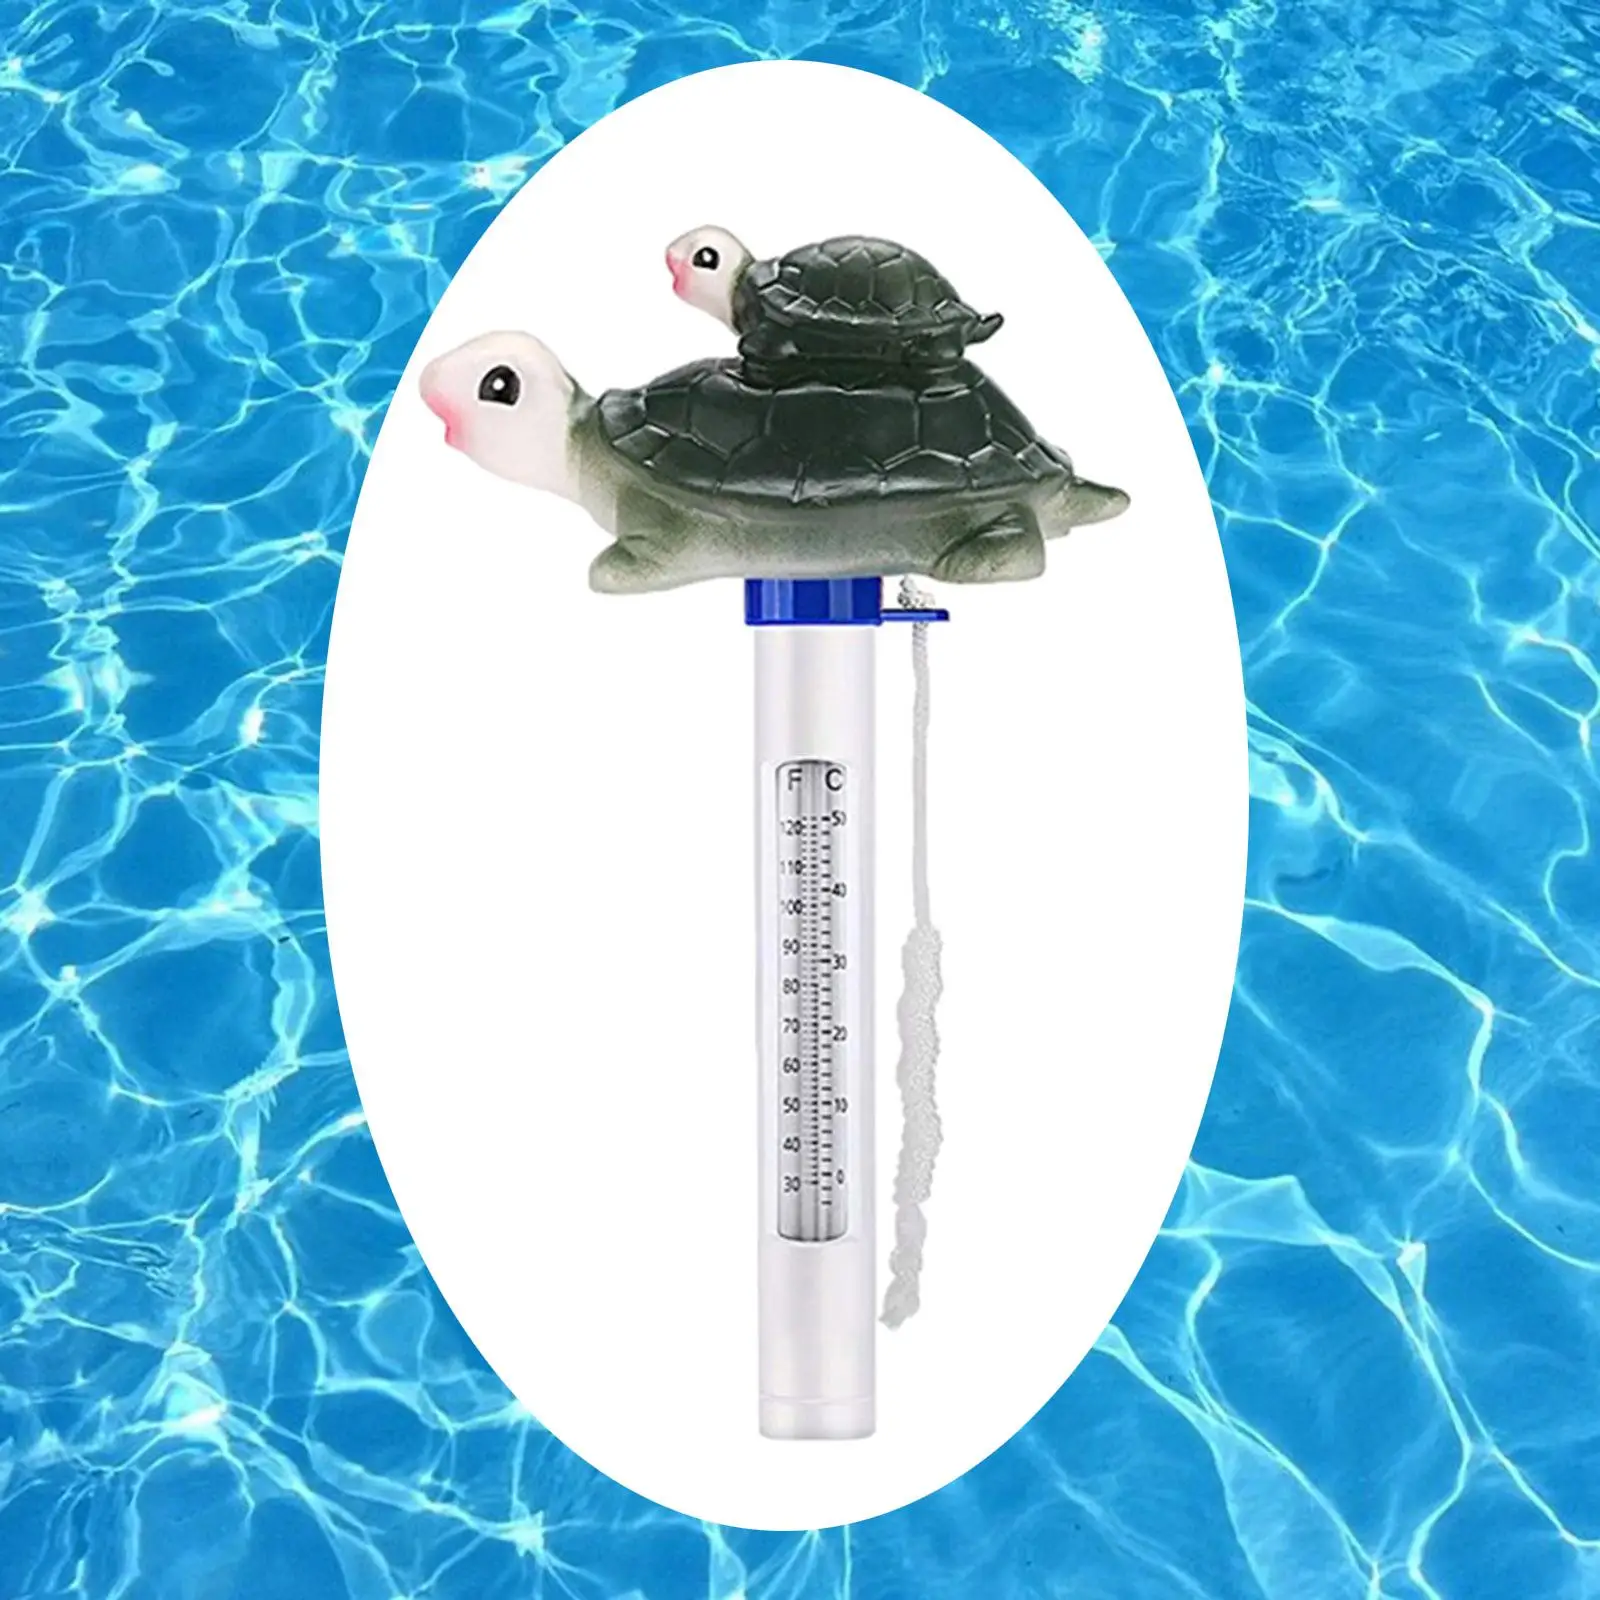 Turtle Floating Pool Thermometer Temperature Gauge C/Outdoor Indoor